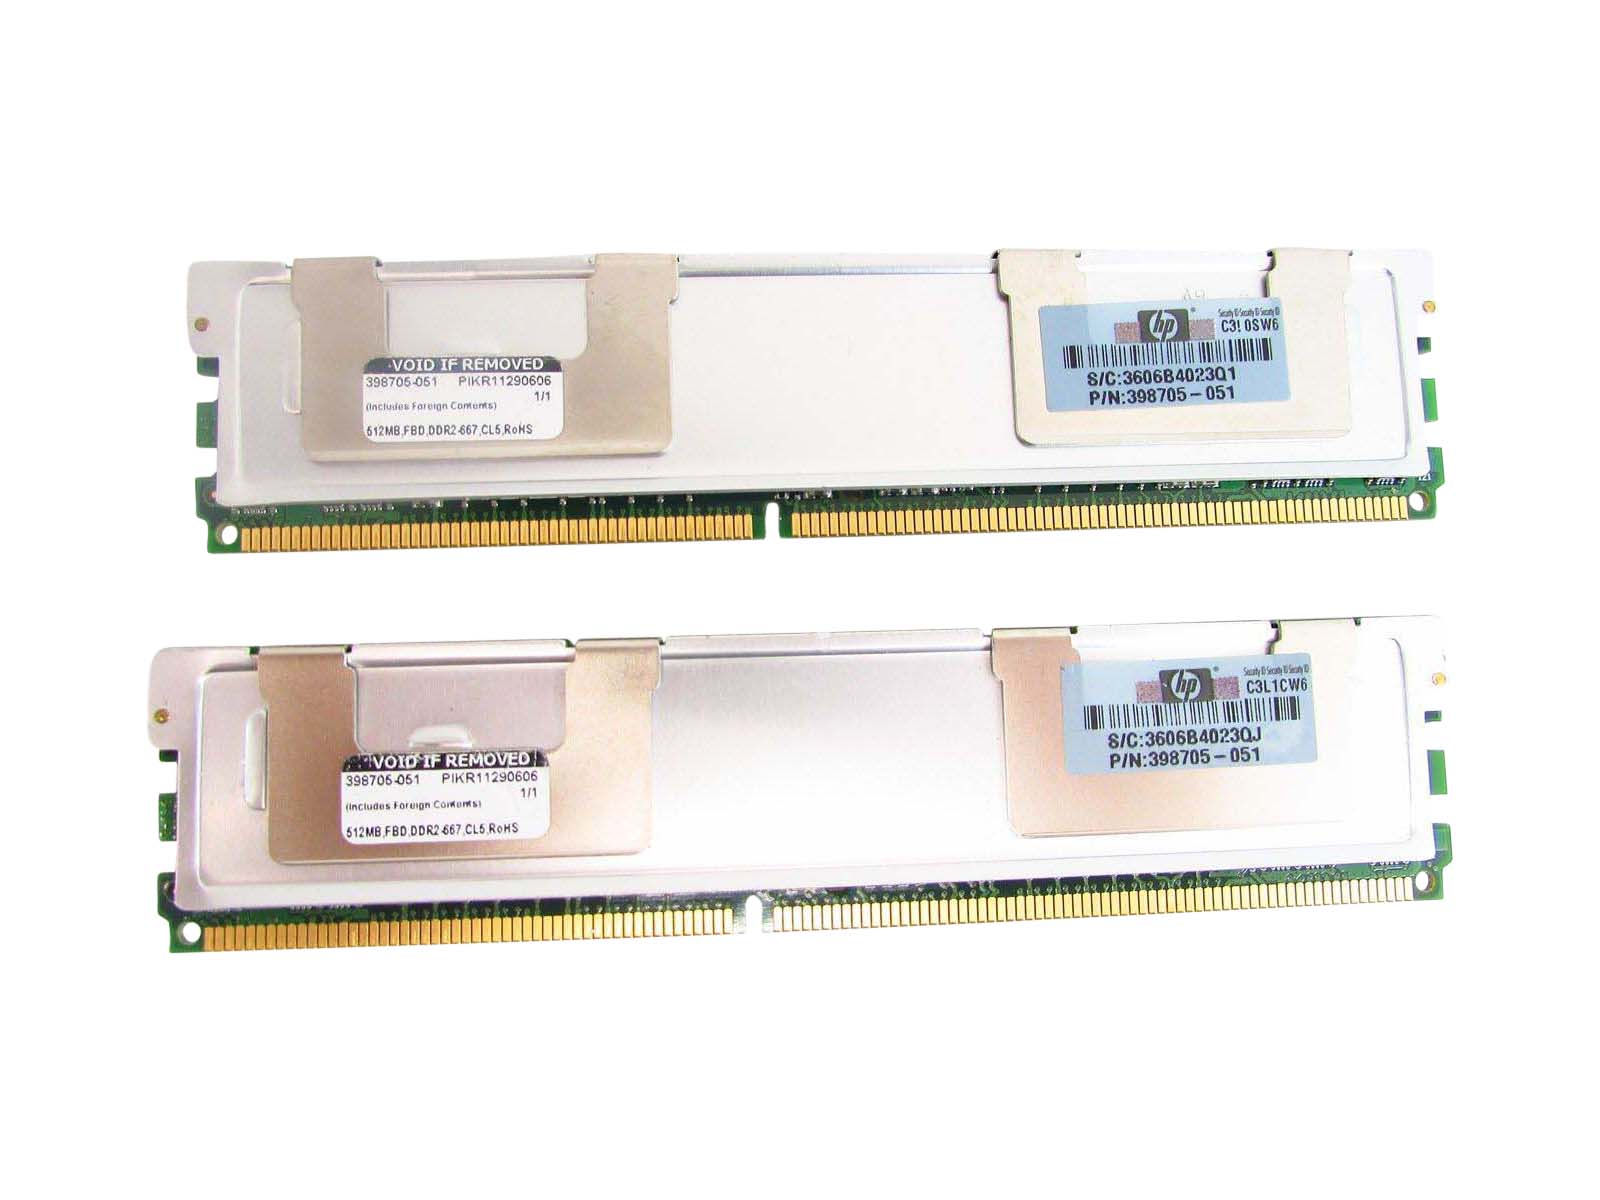 HP-IMSourcing DIMM, 512MB PC2-5300 FBD, 64Mx8 - 512 MB - DDR2 SDRAM - 667 MHz DDR2-667/PC2-5300 - ECC - Fully Buffered - DIMM - 398705-051